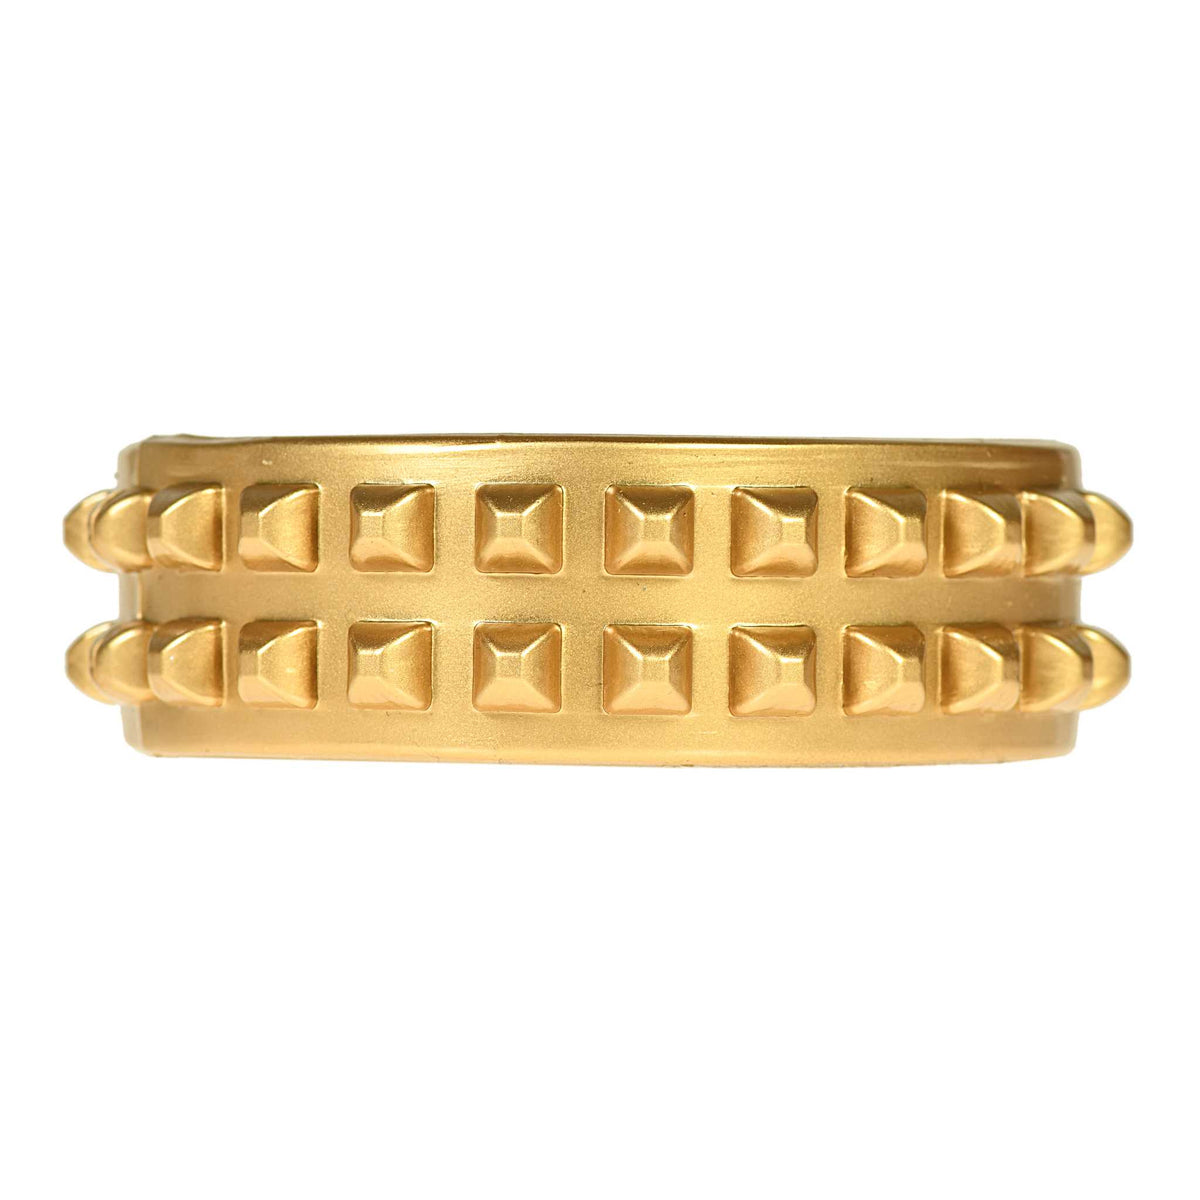 Gold bracelets for women in shiny color